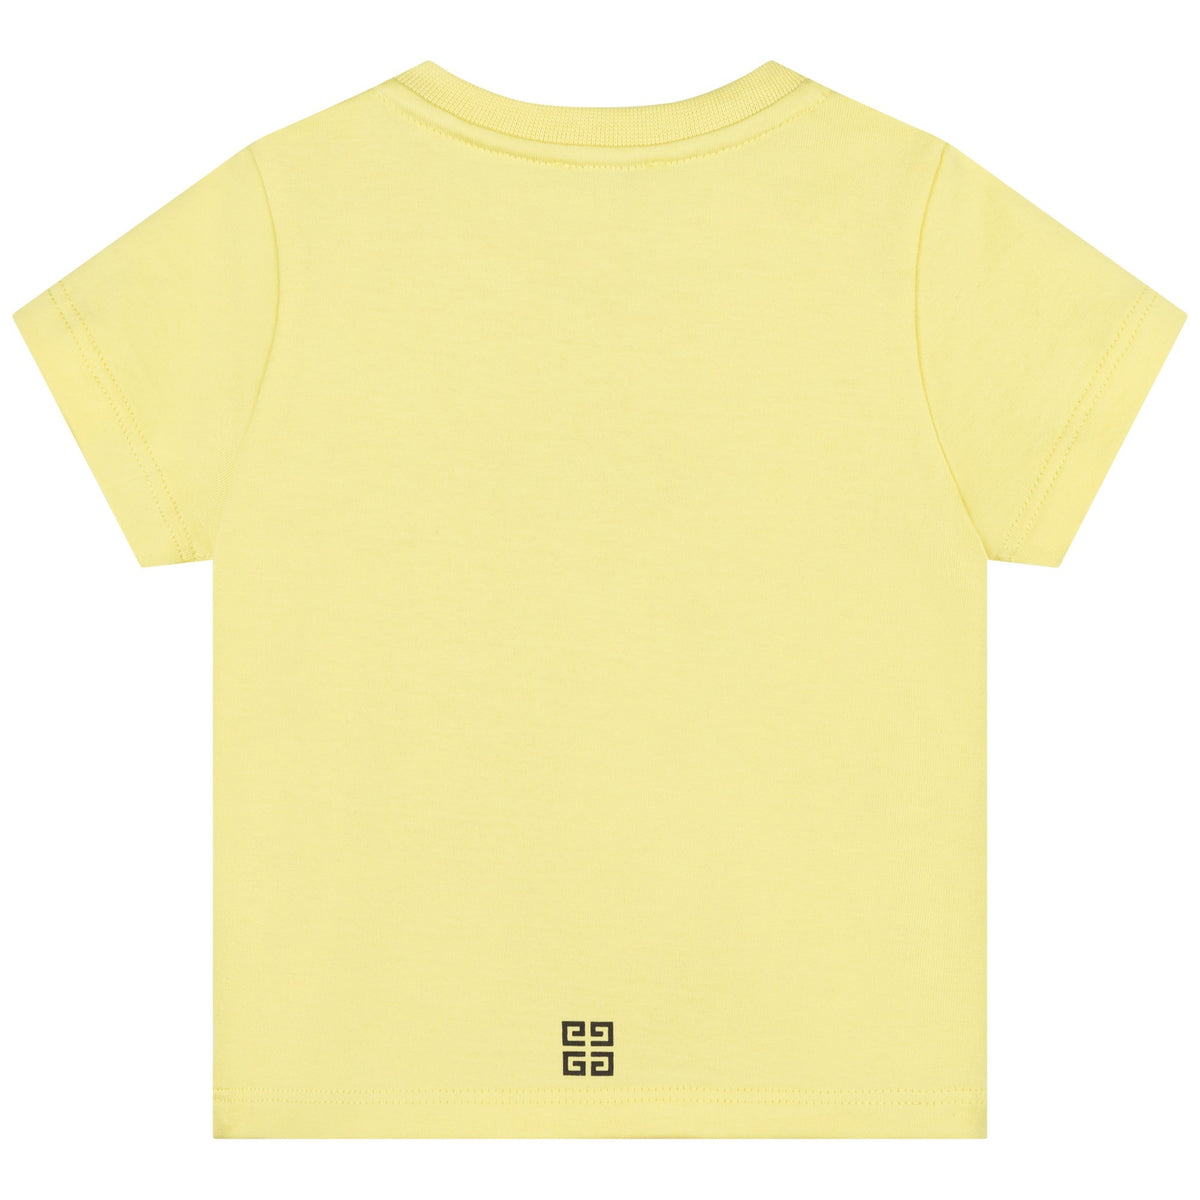 Yellow T-Shirt Givenchy Square Logo